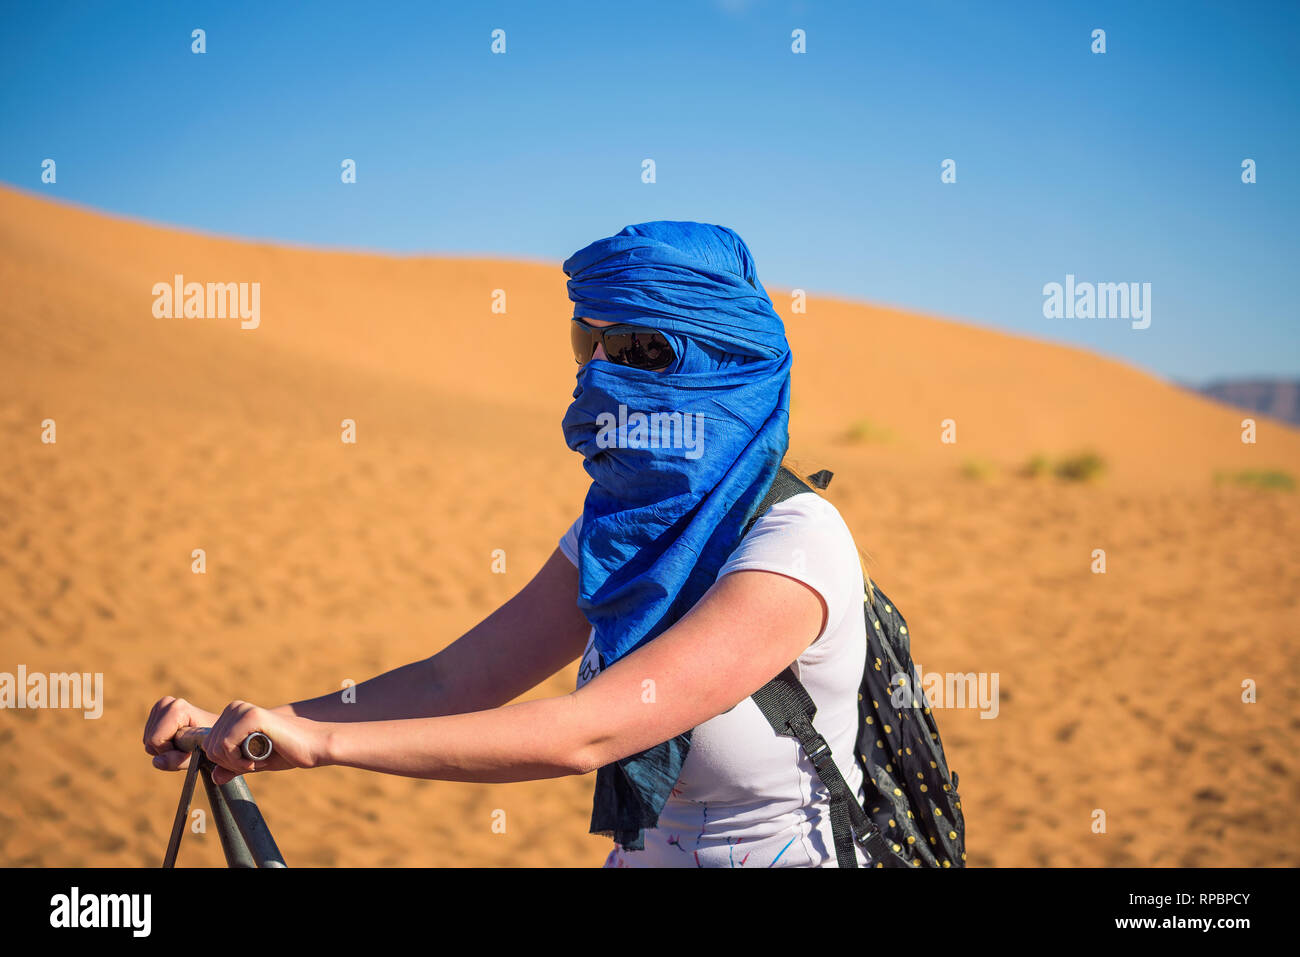 Tourist rides a camel through the sand dunes in the Sahara desert Stock Photo